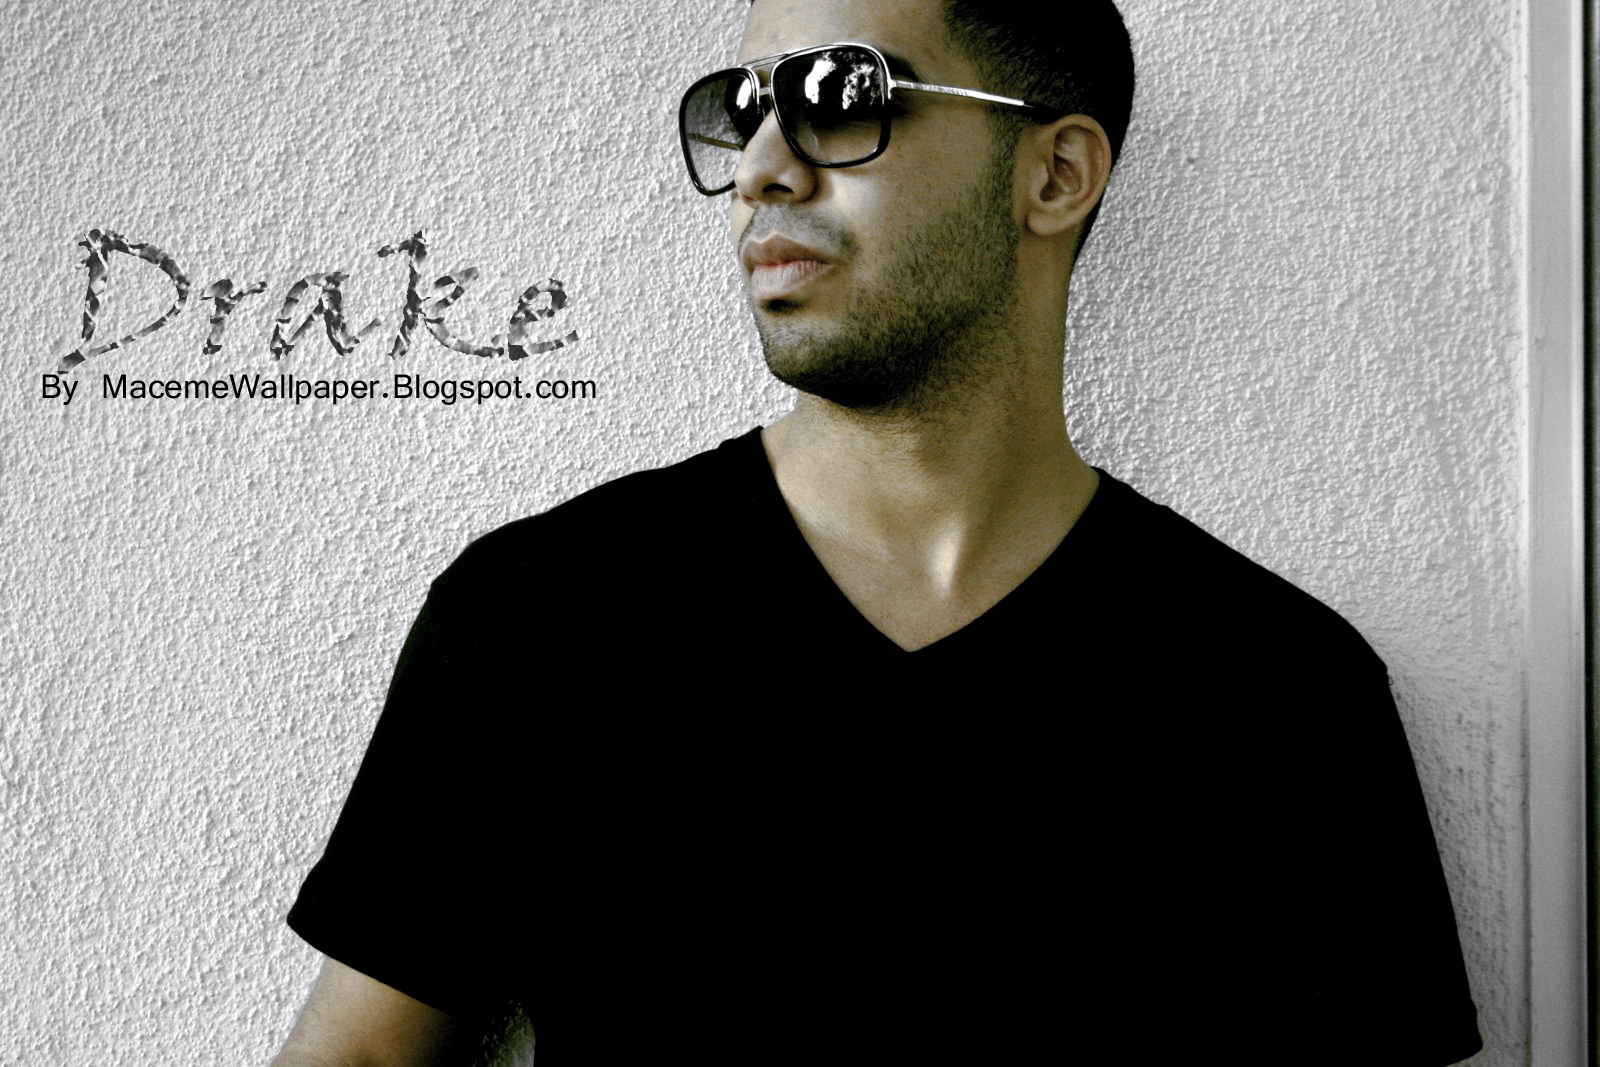 http://4.bp.blogspot.com/-Ok0FHlo5_DI/T8TmHbby78I/AAAAAAAACsA/C2RUjI-UBTg/s1600/Drake+best+rapper+on+youtube+by+maceme+wallpaper.jpg